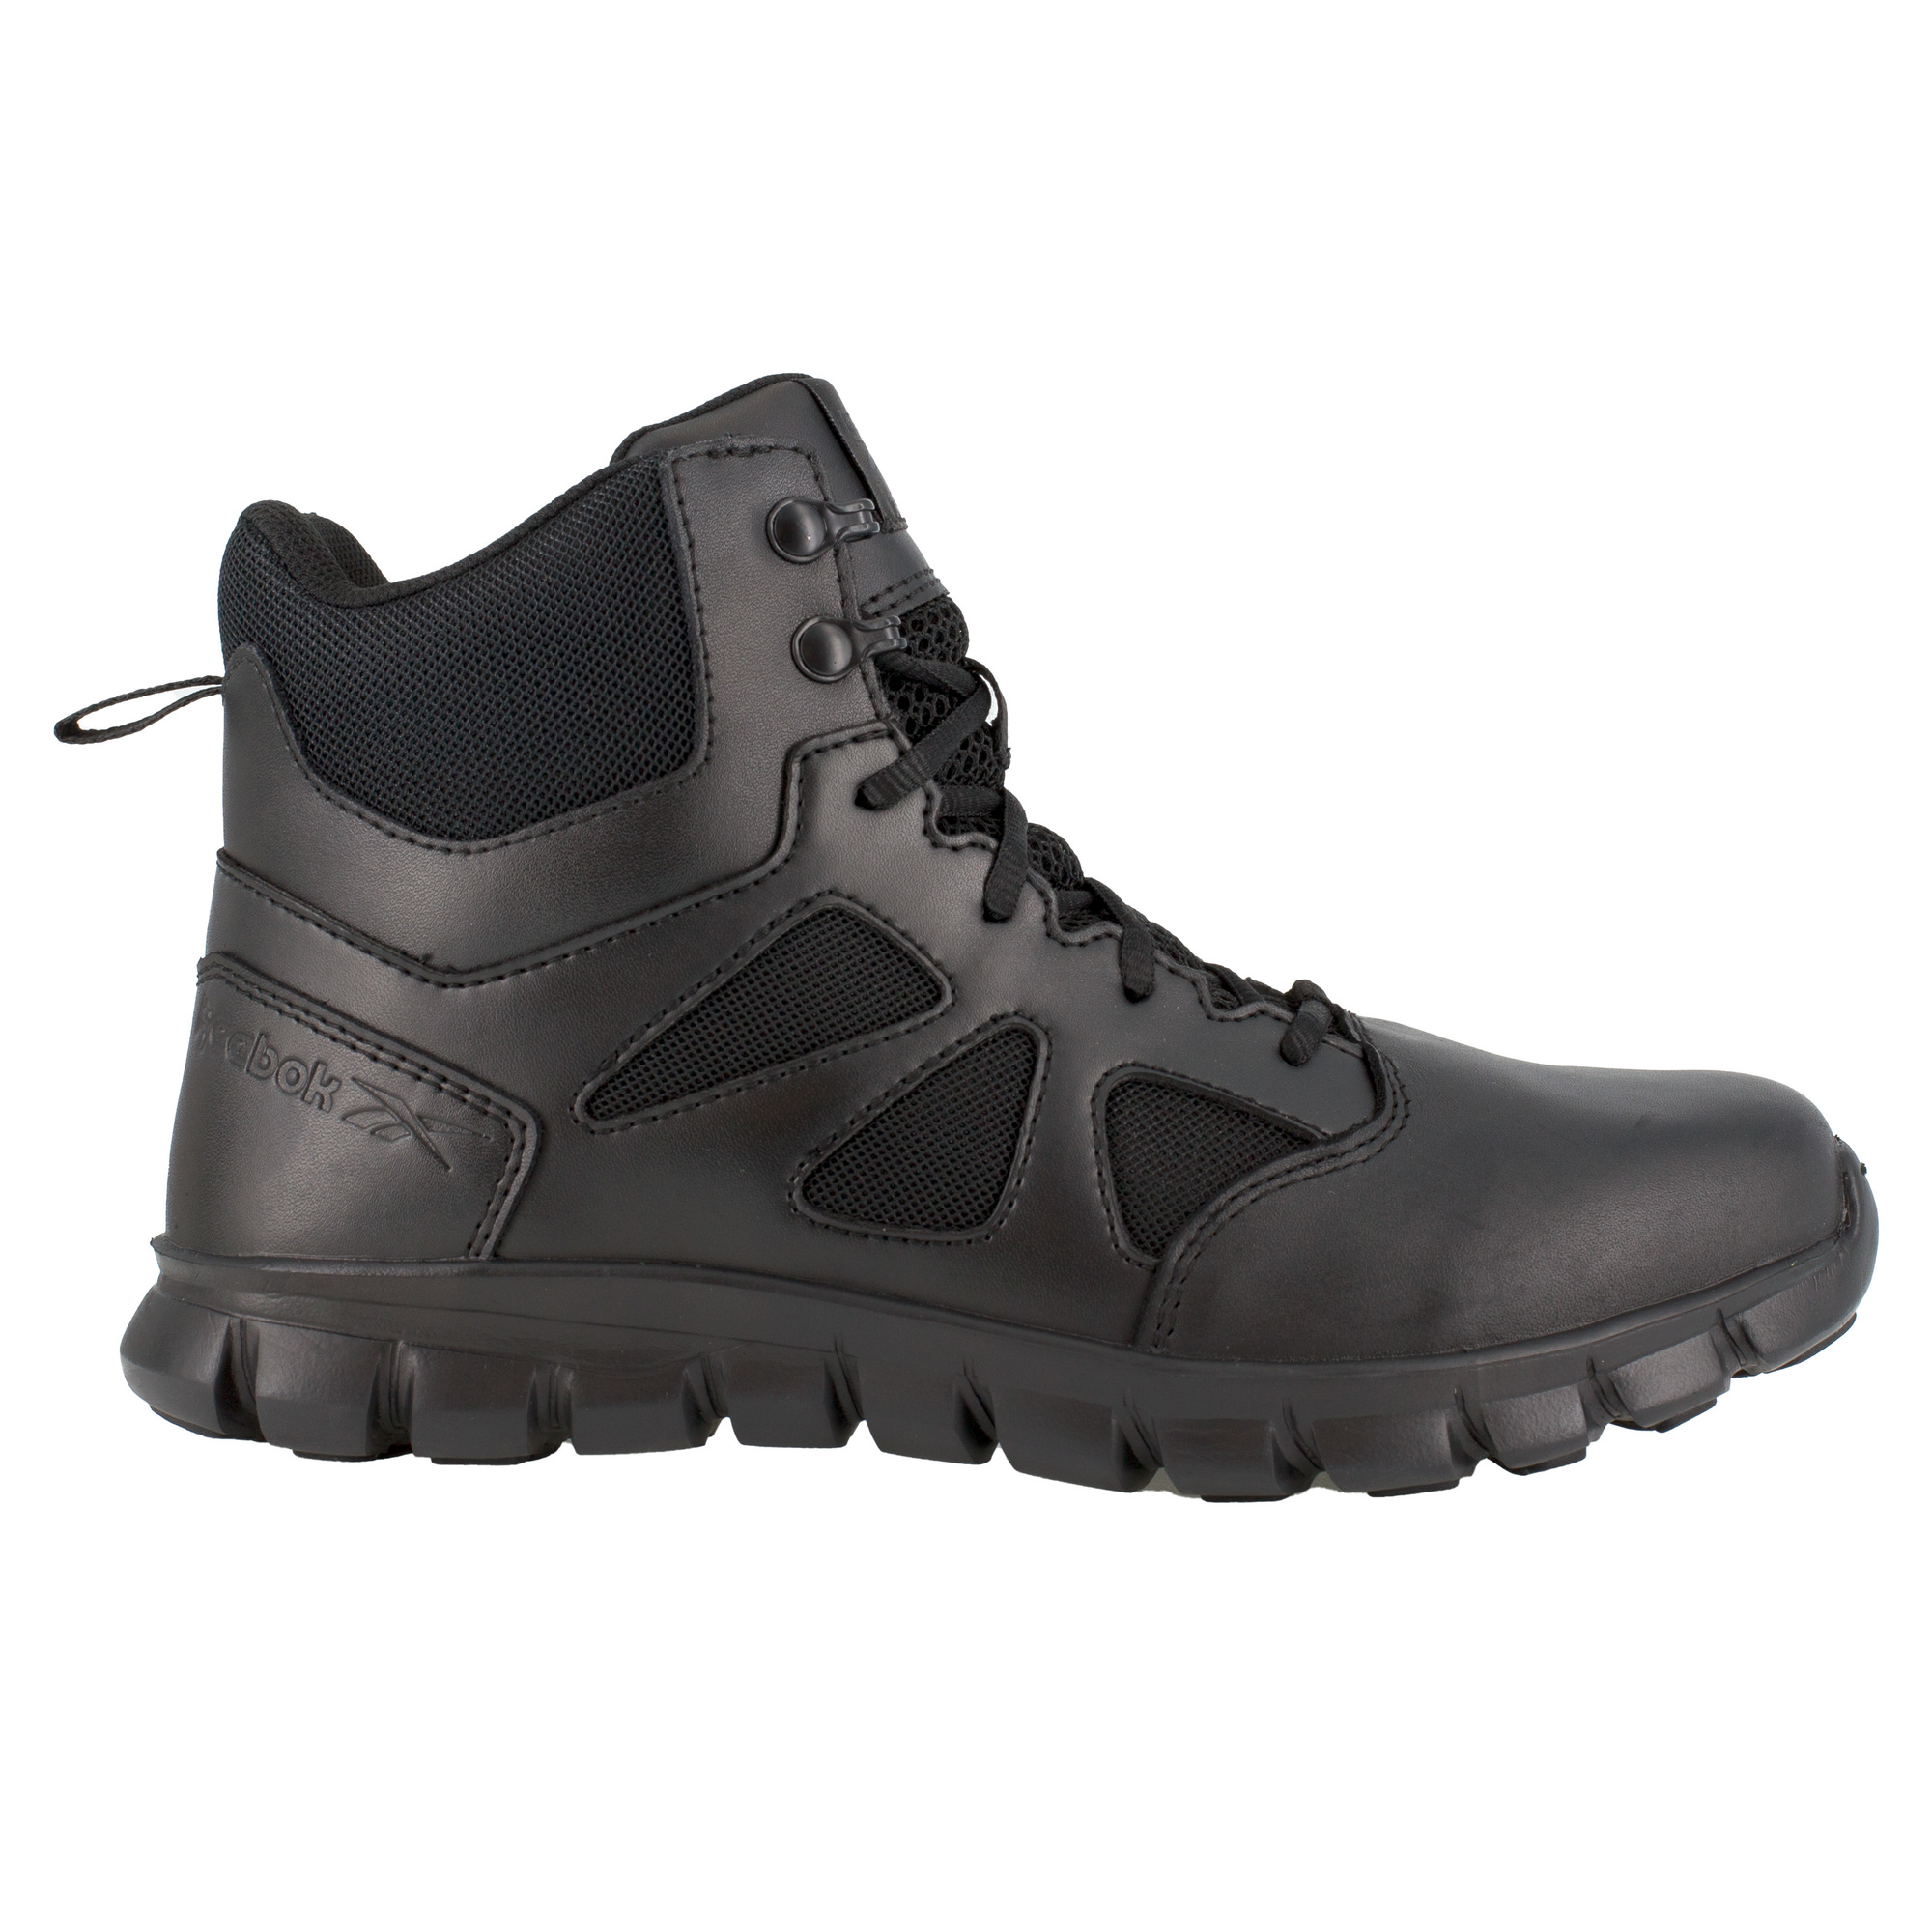 Reebok, 6Inch Tactical Boot w/Side Zipper, Size 11 1/2, Width Wide, Color Black, Model RB086